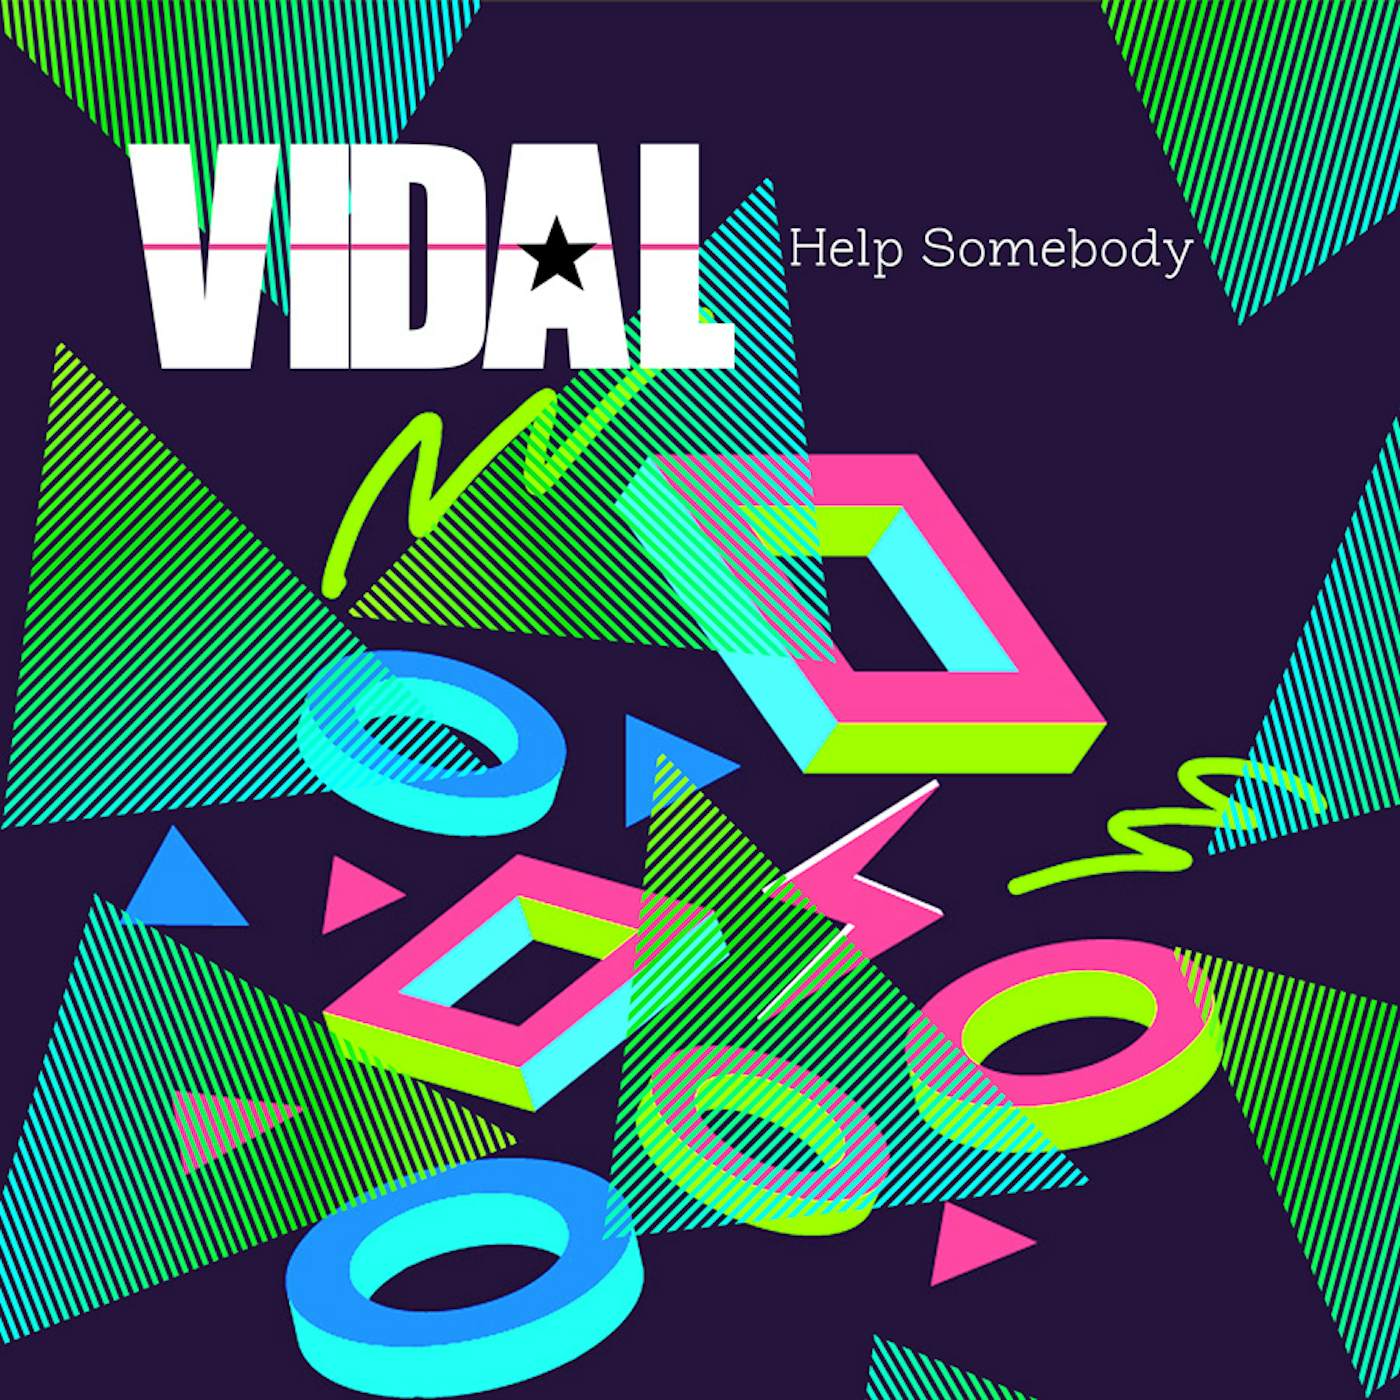 Vidal HELP SOMEBODY CD